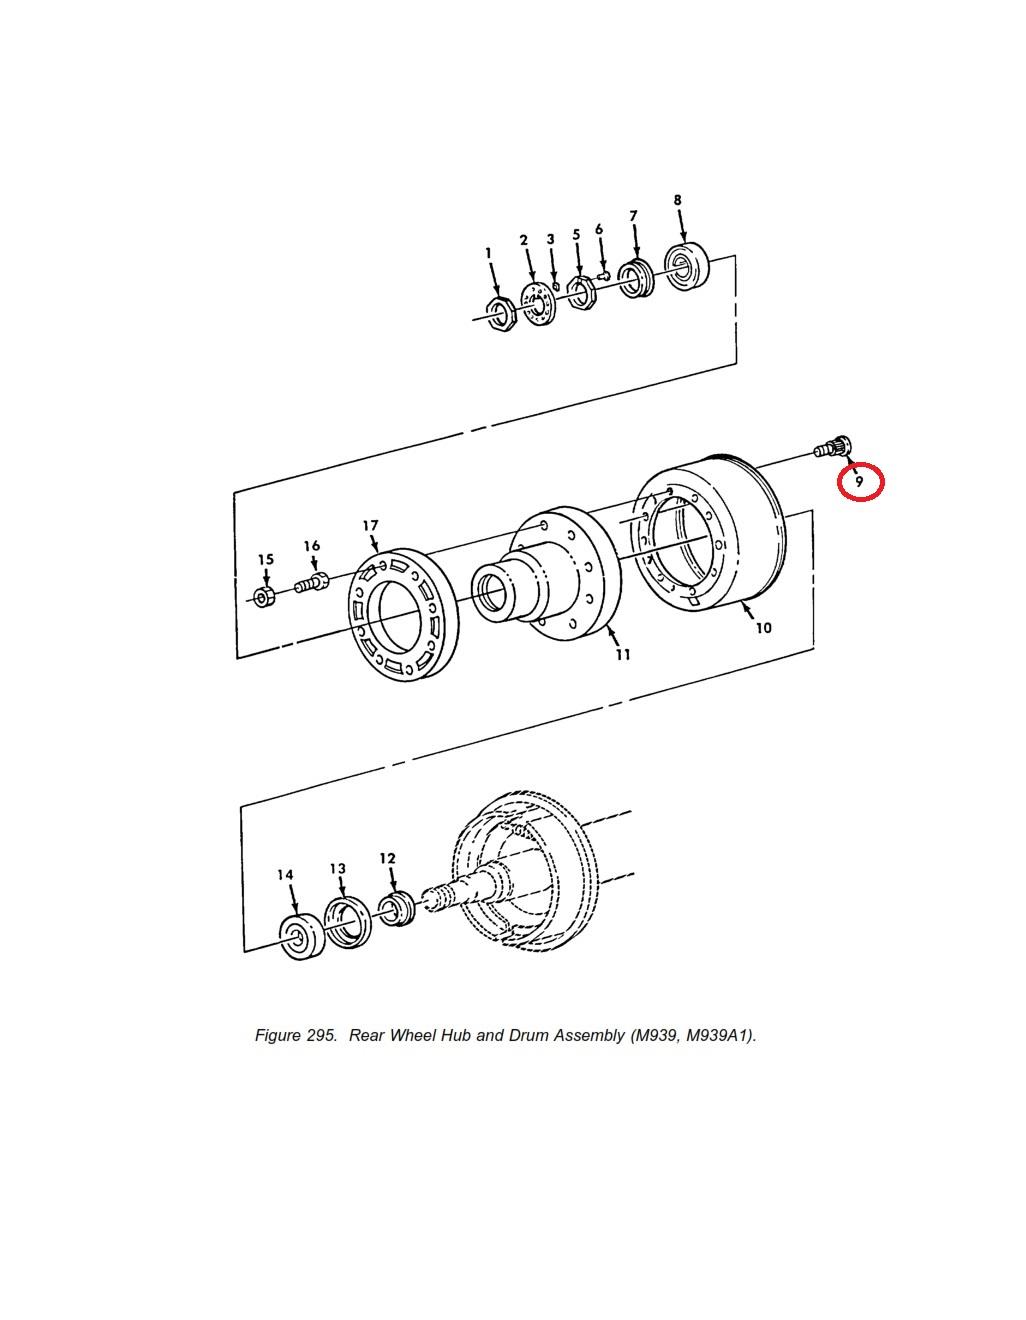 5T-796 | 5T-796 Left Rear Wheel Hub Stub Parts Diagram.jpg